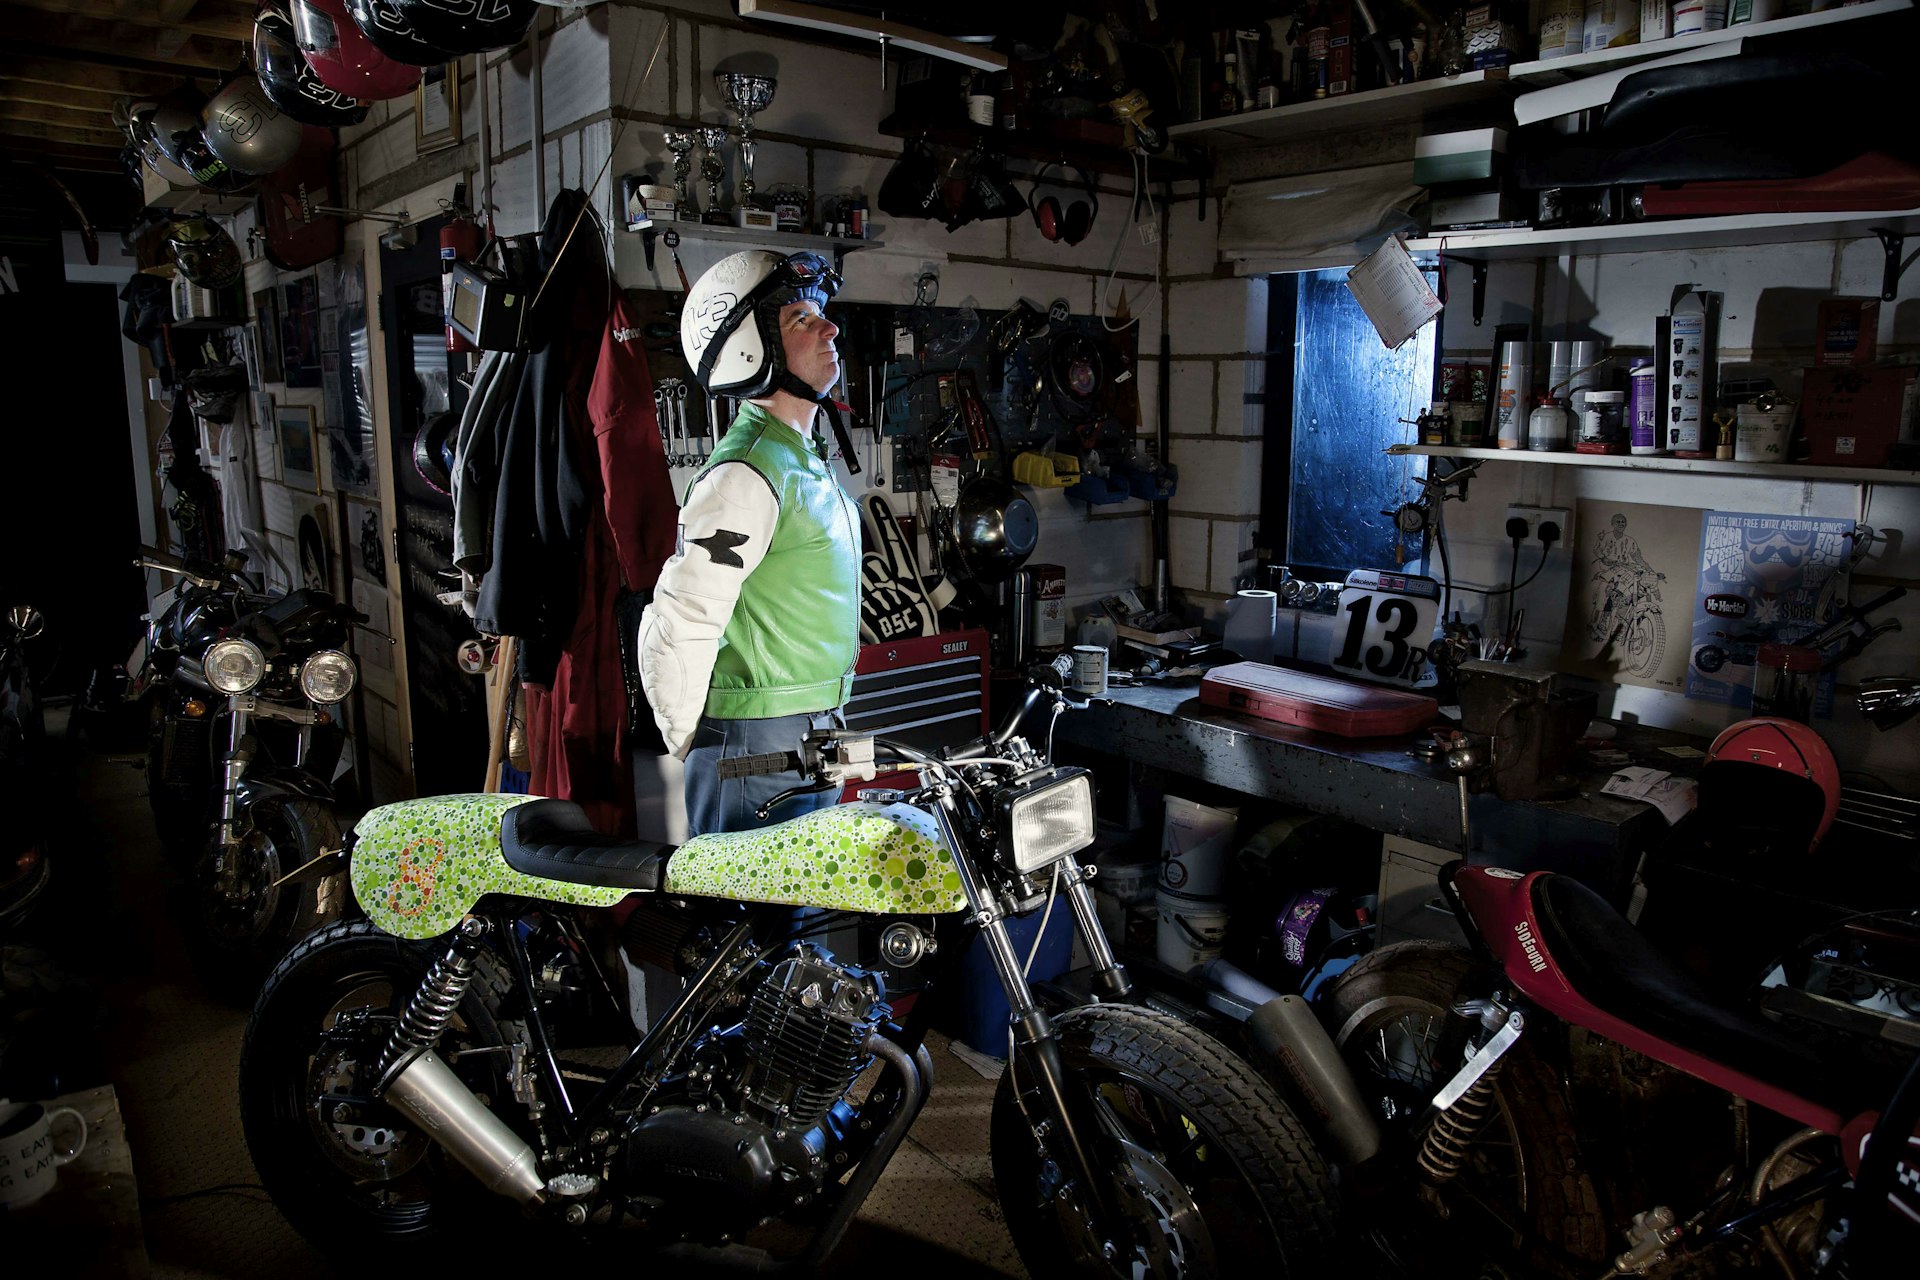 DIY motorbike magazine Sideburn celebrates the power of unsung heroes